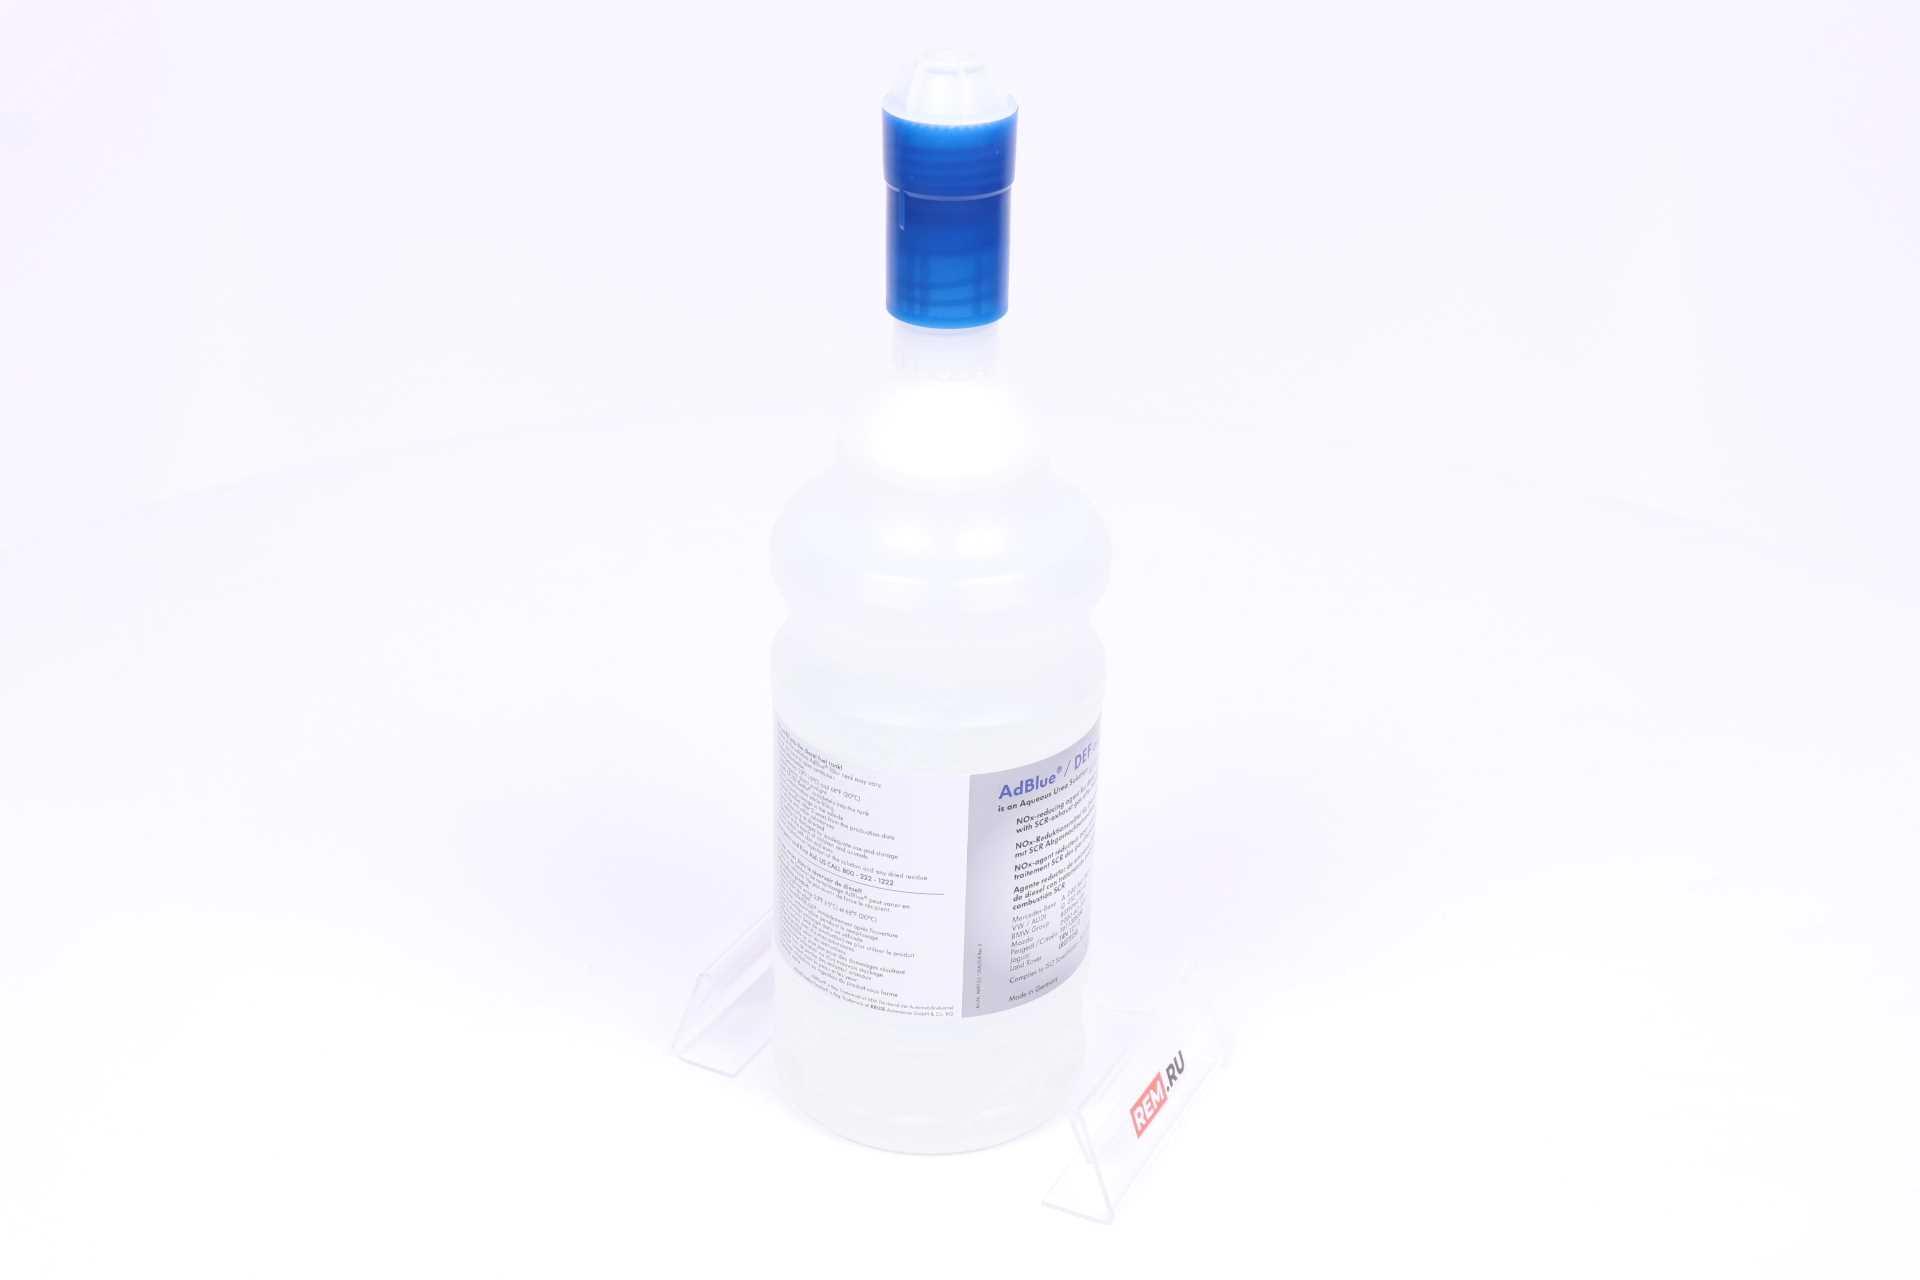  G052910A2  жидкость adblue (мочевина), 1.89л (фото 4)